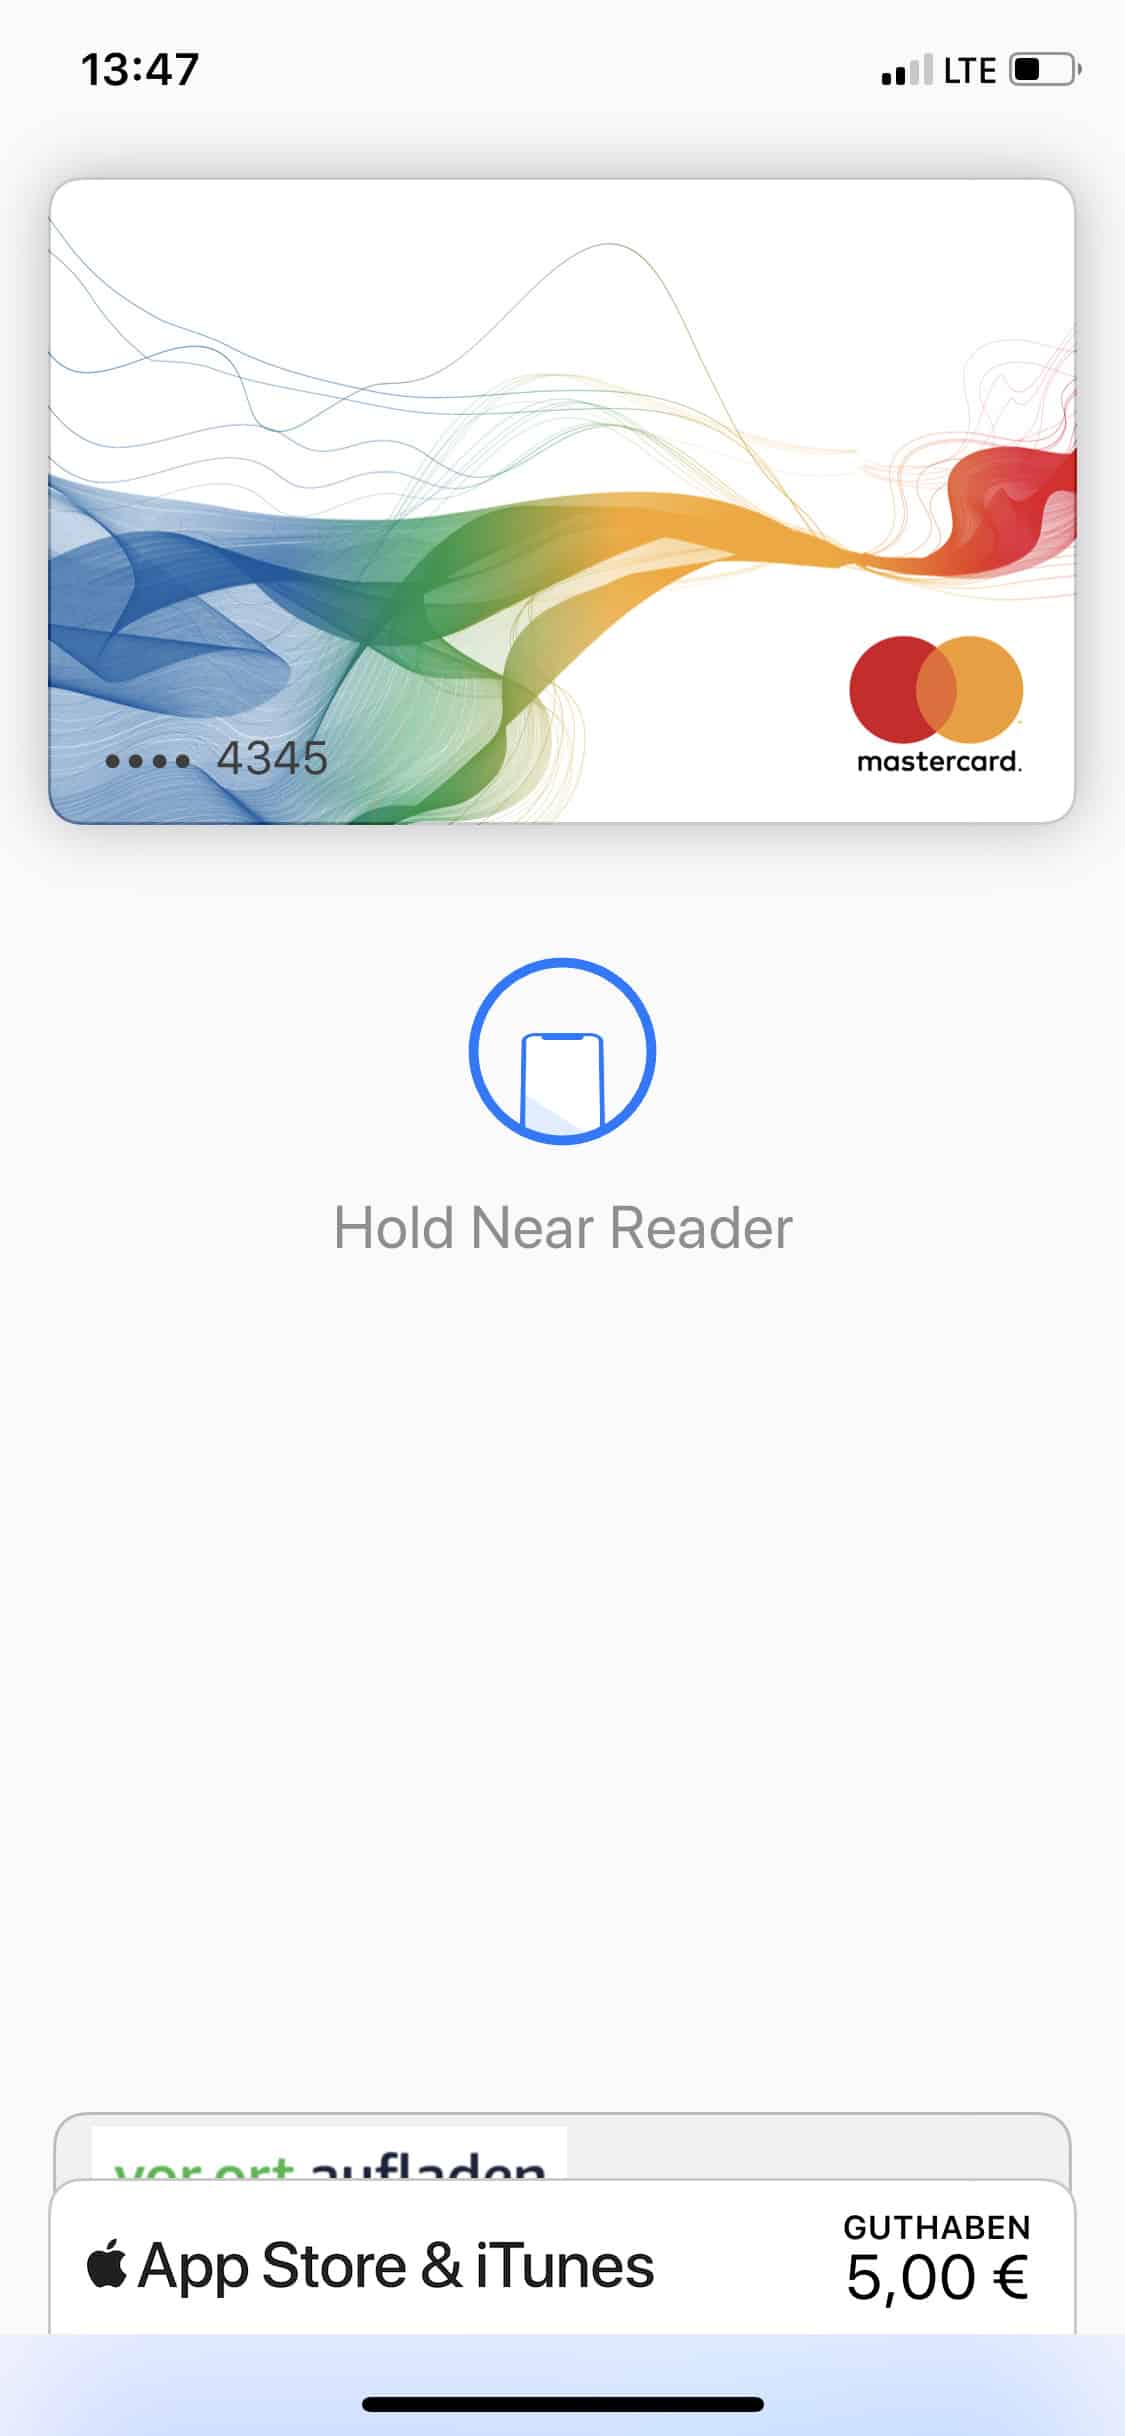 Apple iPhone - iPhone X - Wallet - Apple Pay - Bezahlvorgang